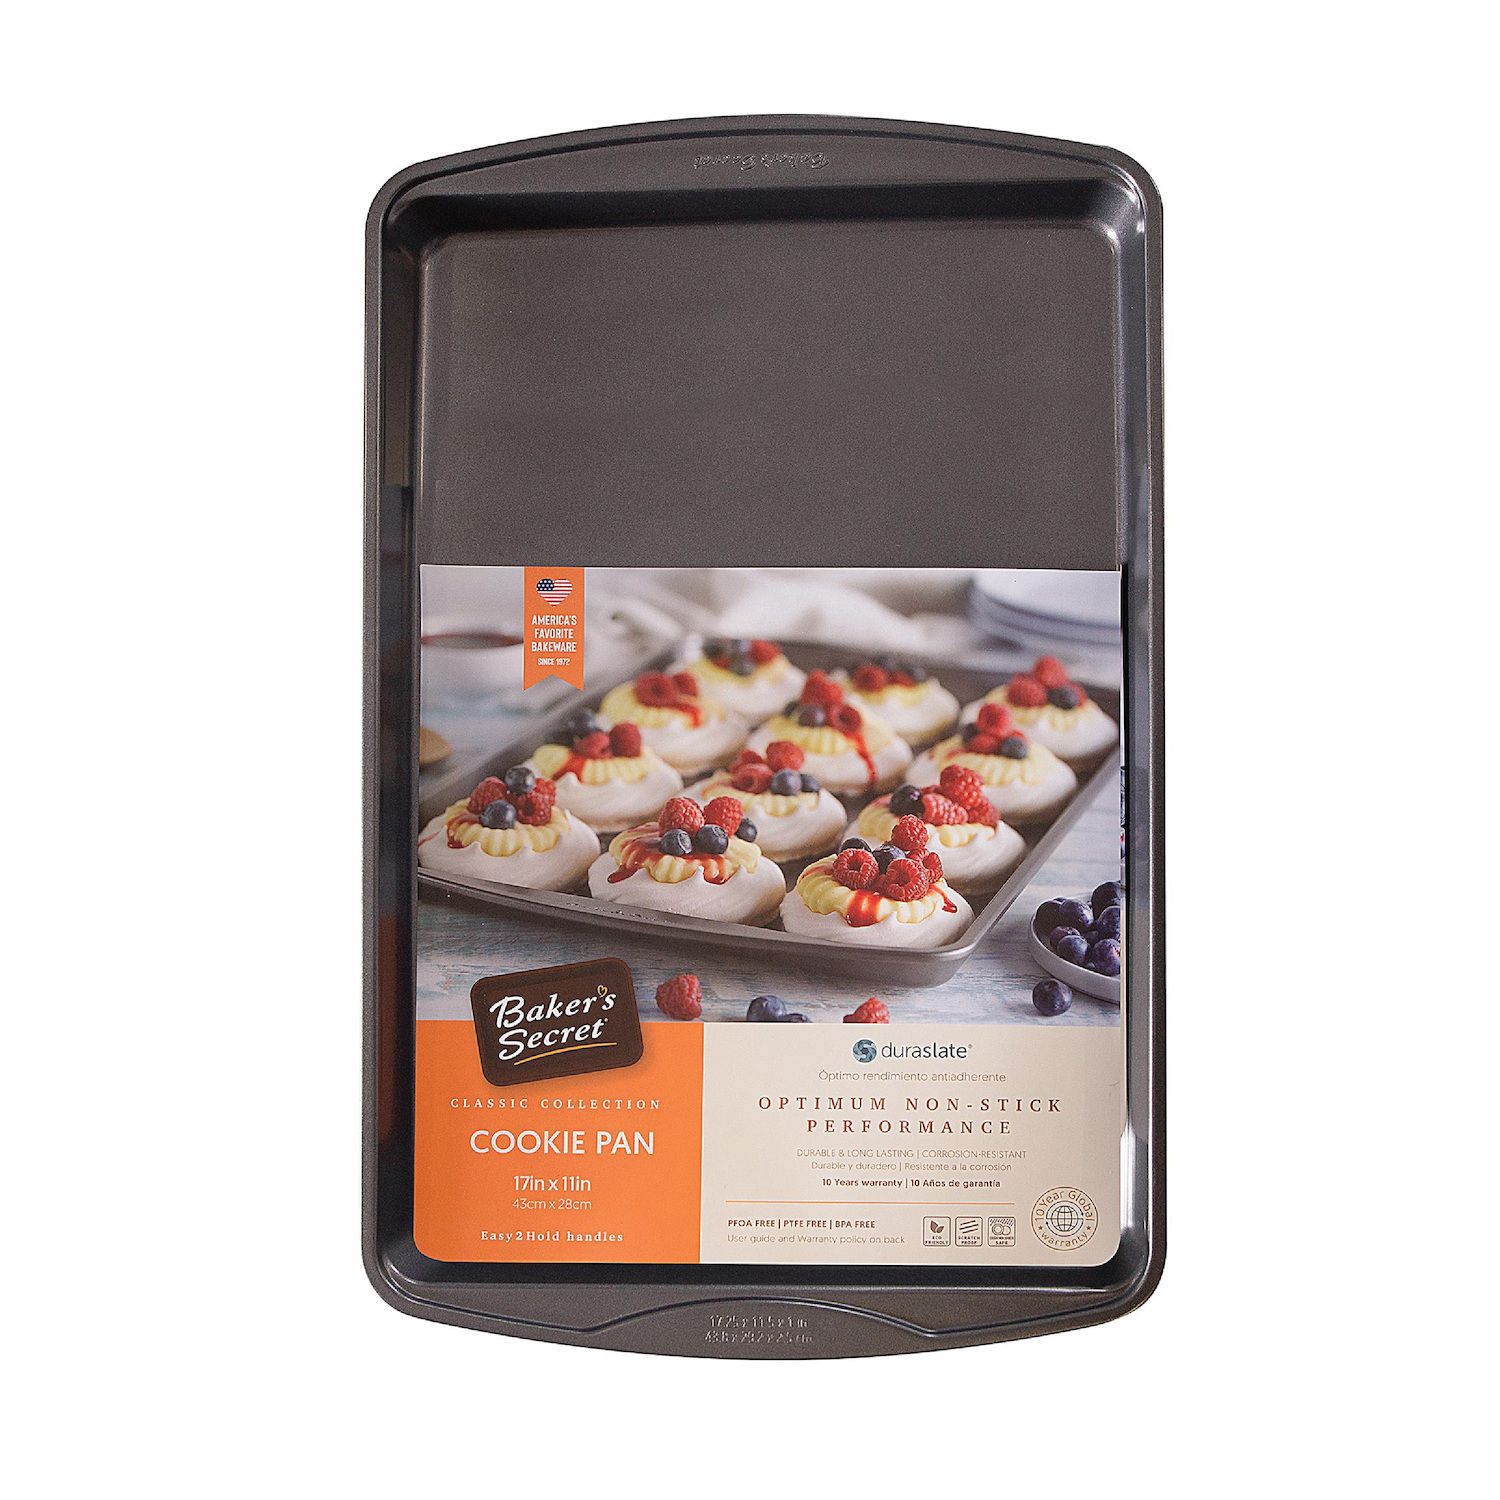 Anolon Advanced Bakeware 11 x 17 inch Cookie Sheet